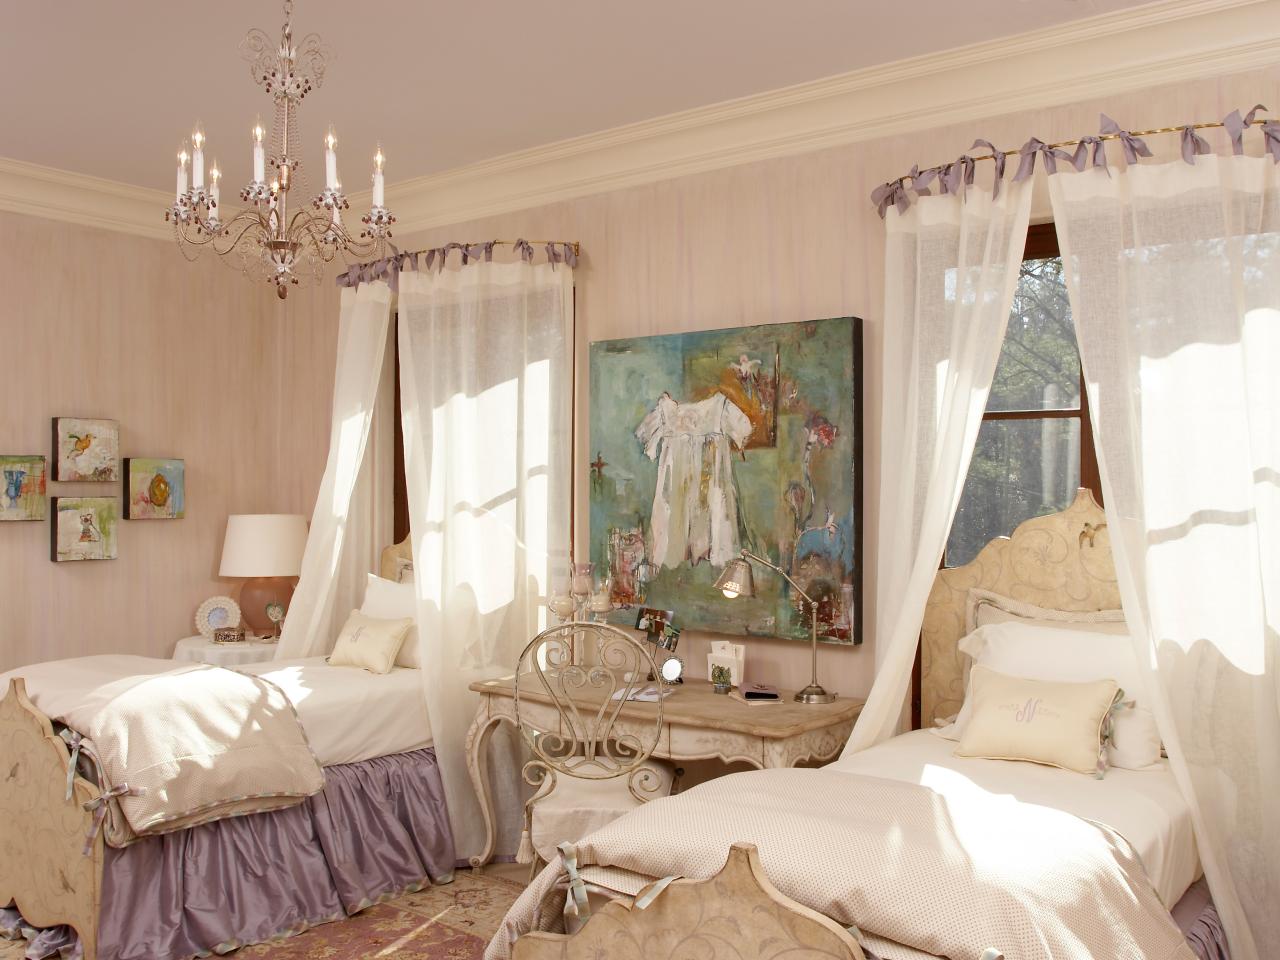 Bed Crown Design Ideas | Bedrooms & Bedroom Decorating Ideas | HGTV